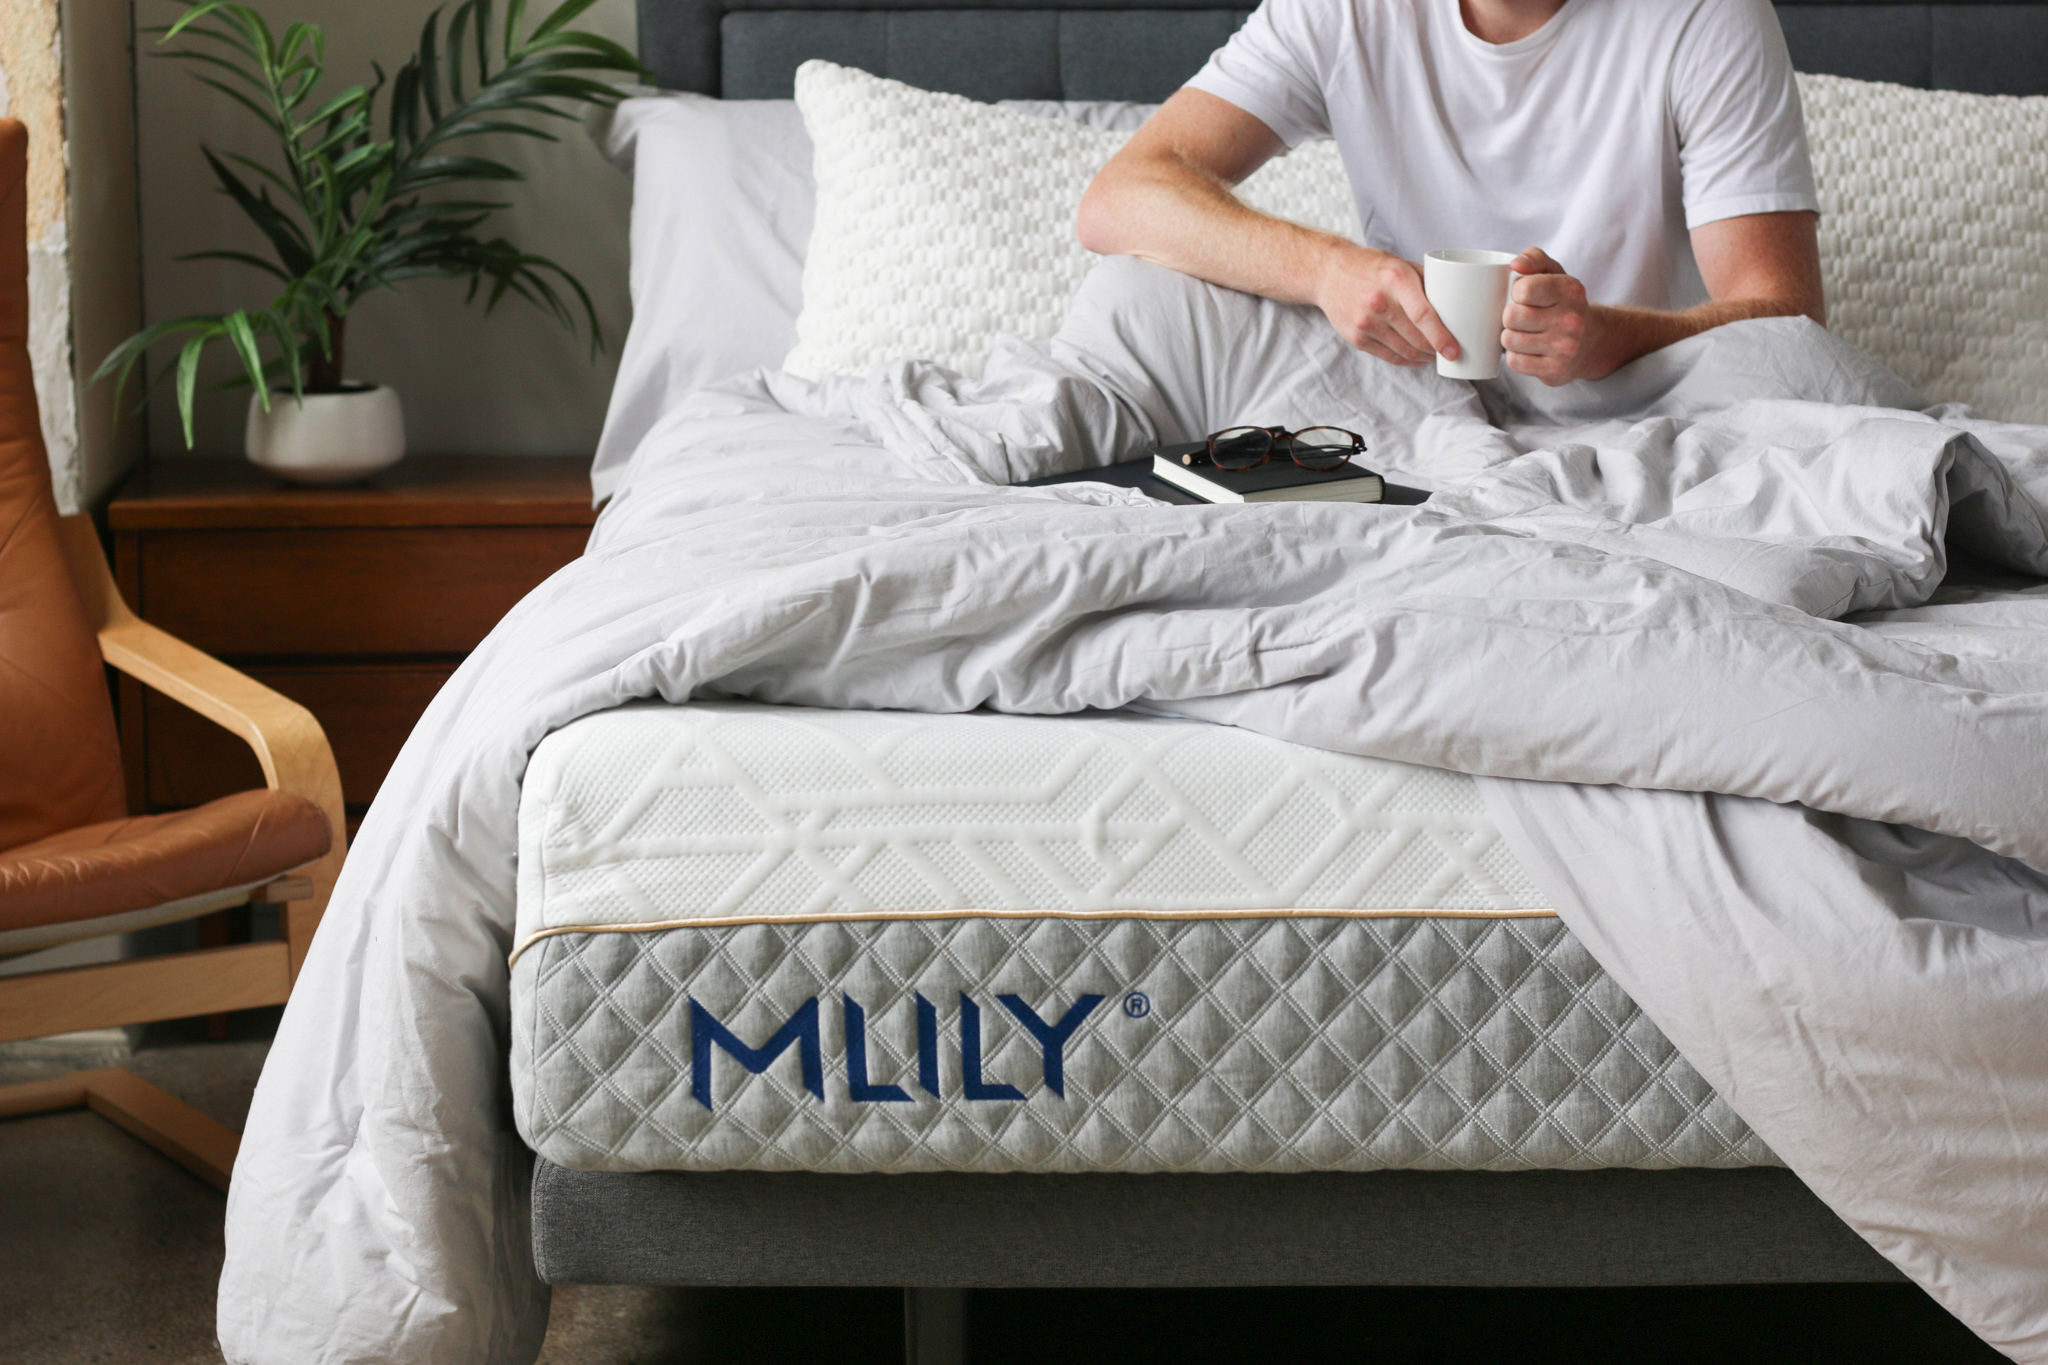 Man sitting on a purpose built MLILY mattress with a coffee mug